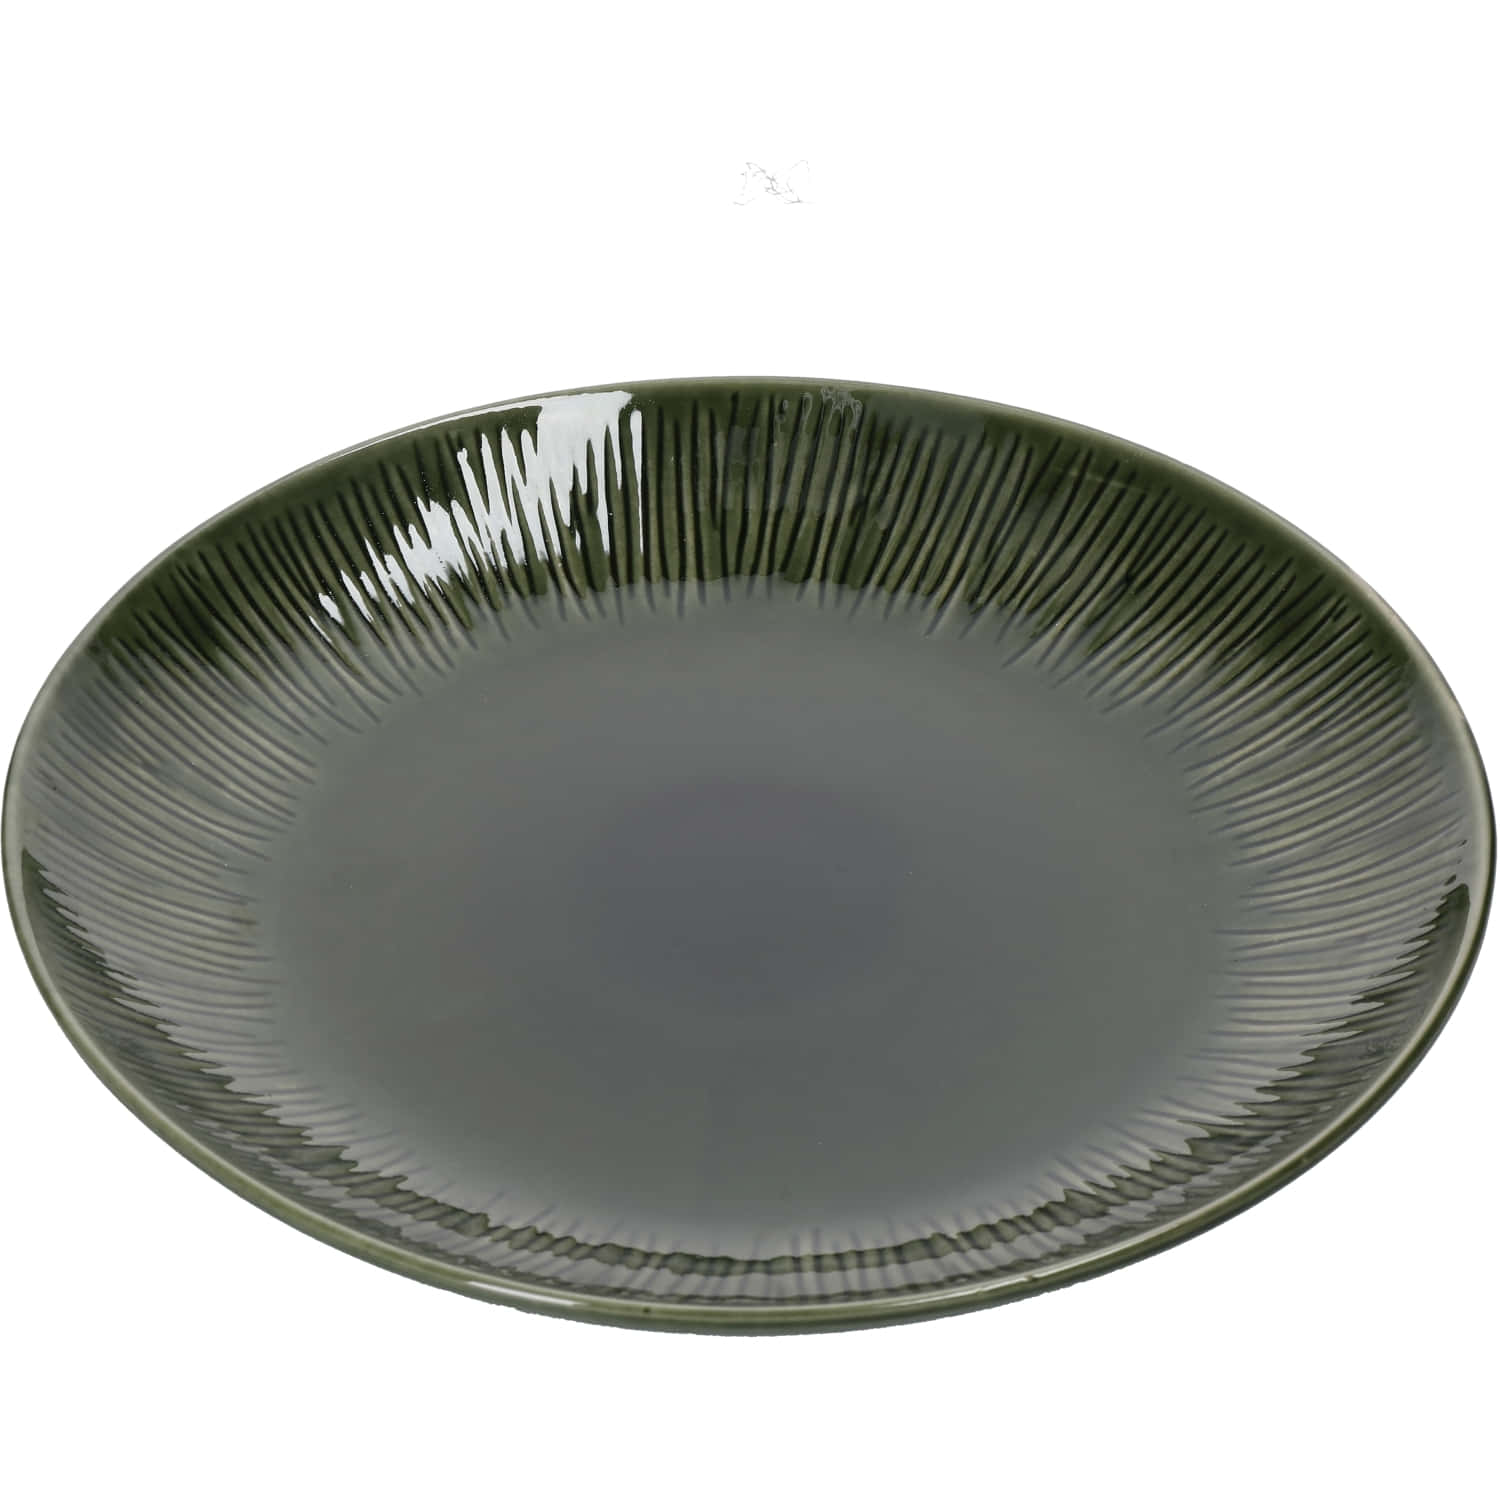 Mikasa Jardin 4pc Stoneware Dinner Plate Set 27cm